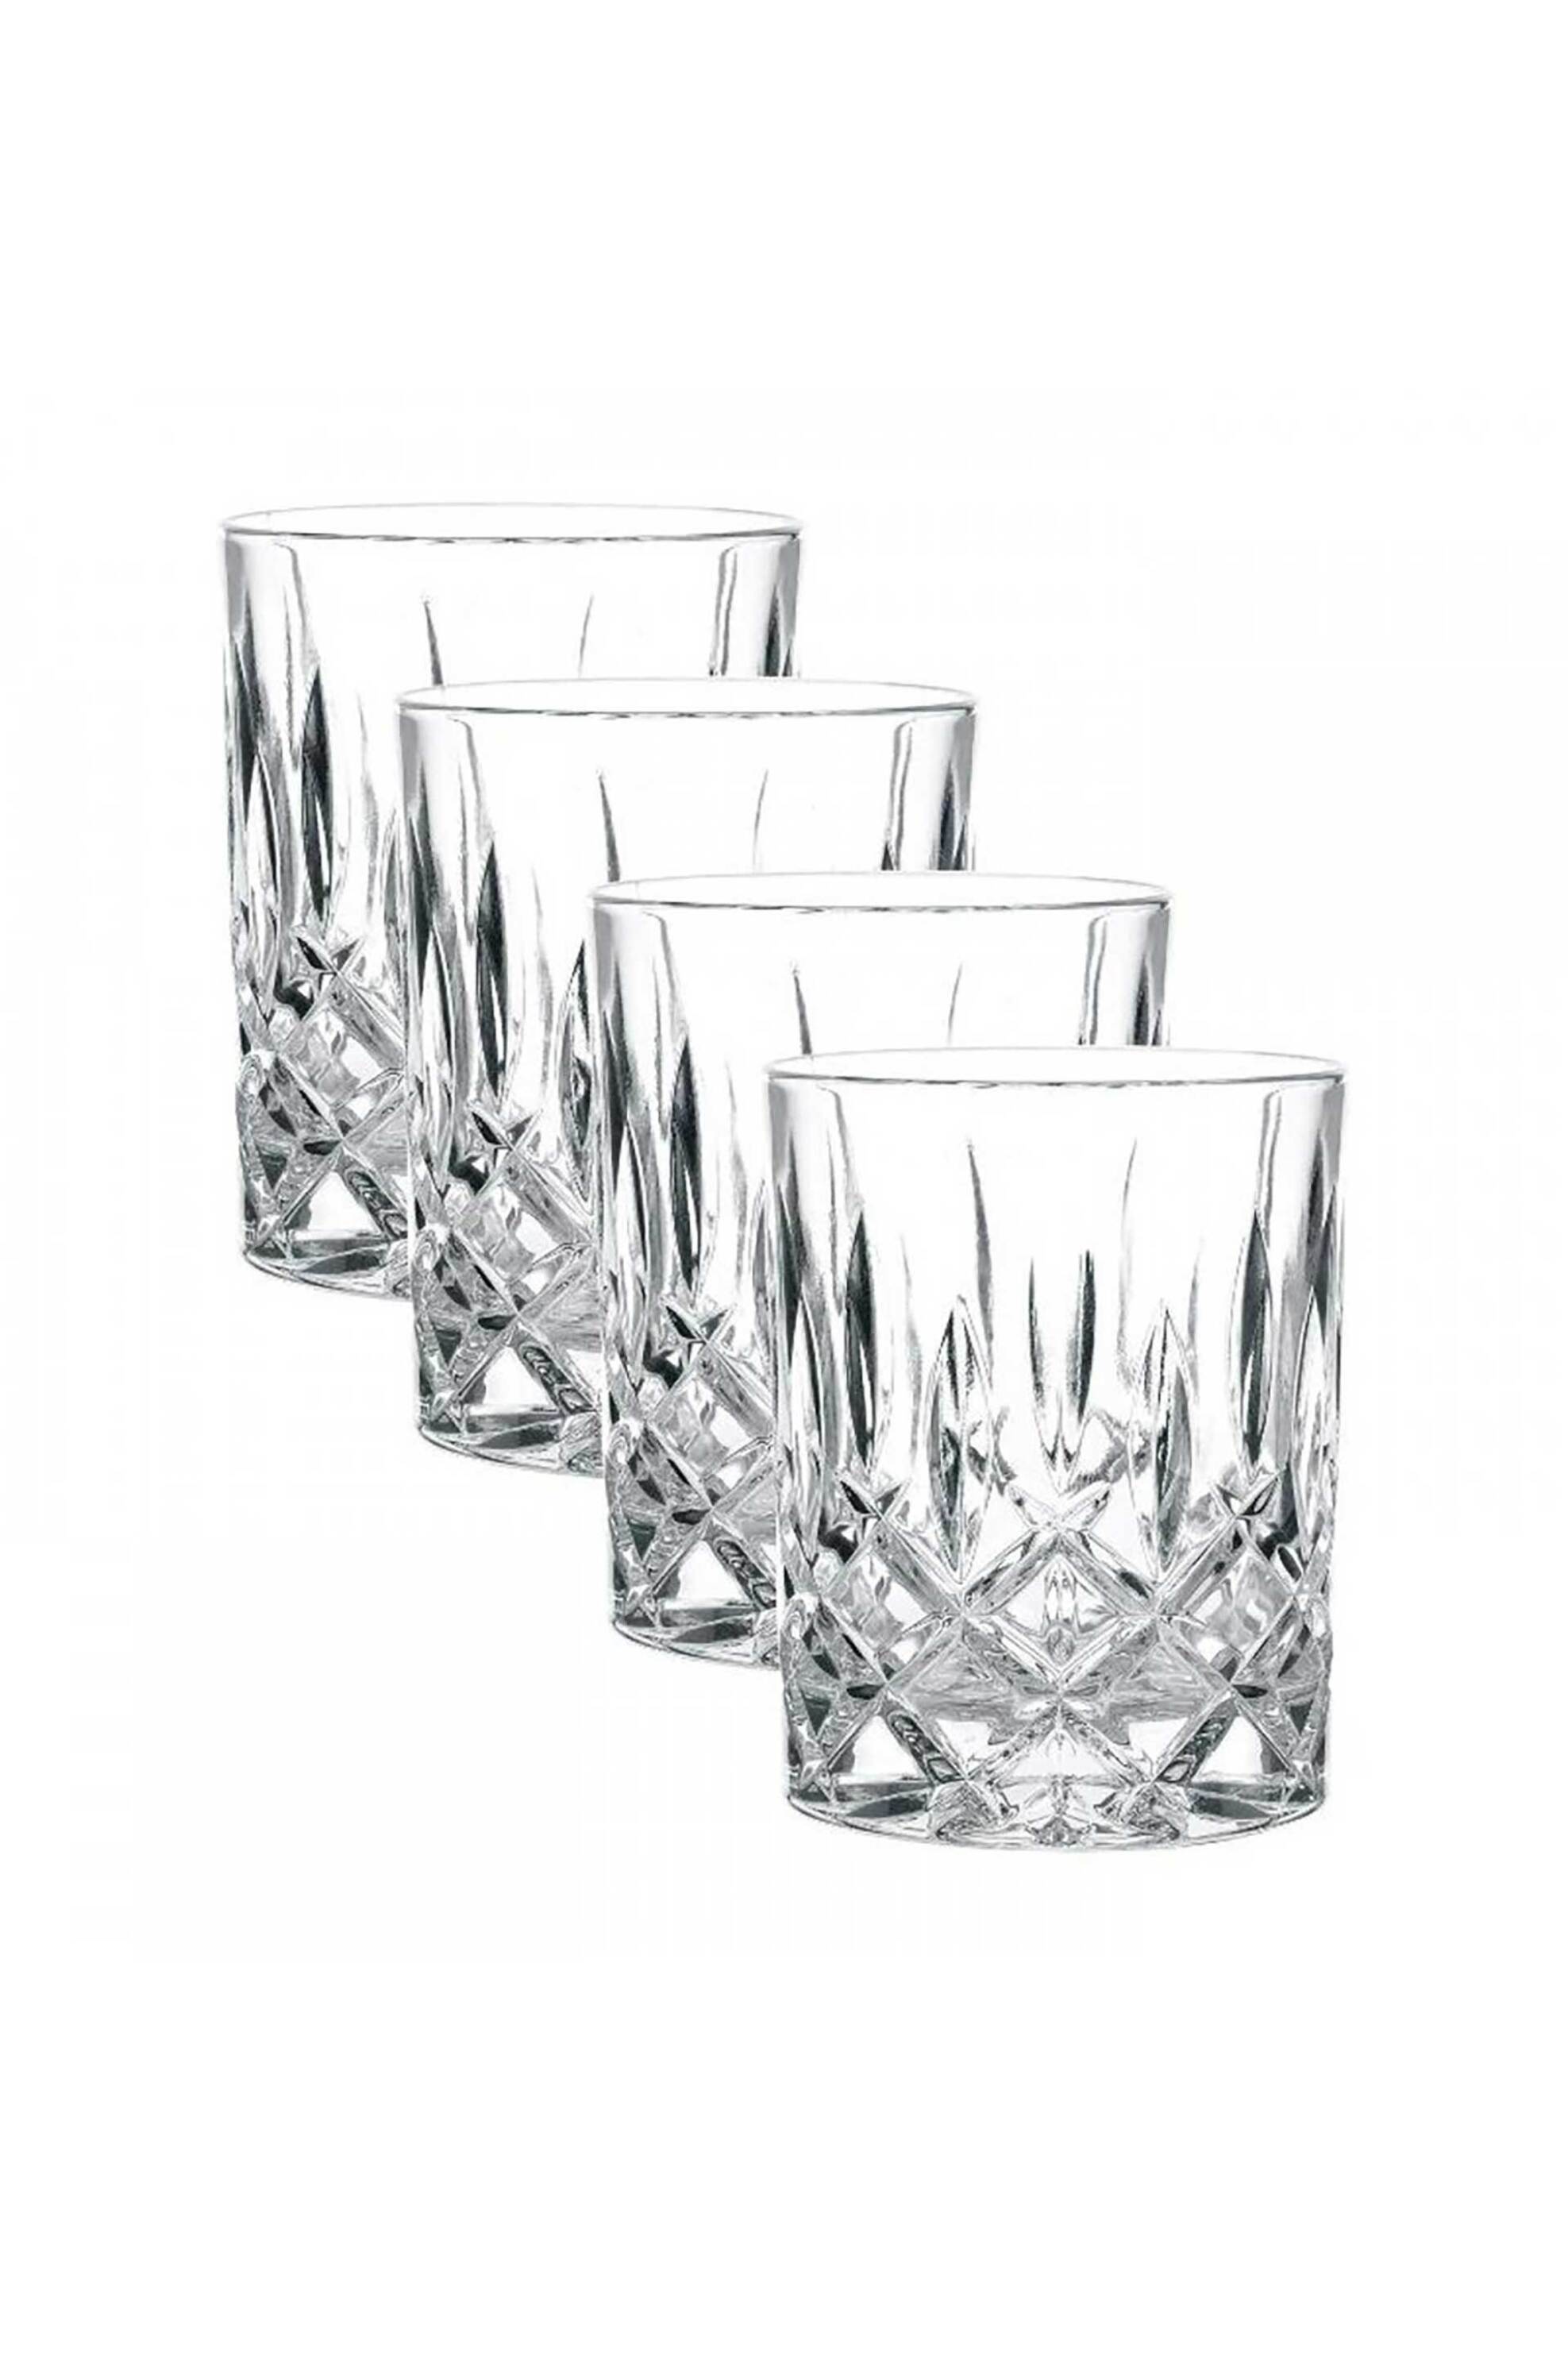 Home > ΚΟΥΖΙΝΑ > Υαλικά > Ποτήρια Nachtmann σετ κρυστάλλινα ποτήρια ουίσκι με ανάγλυφο σχέδιο "Noblesse" 295 ml - 0089207-0